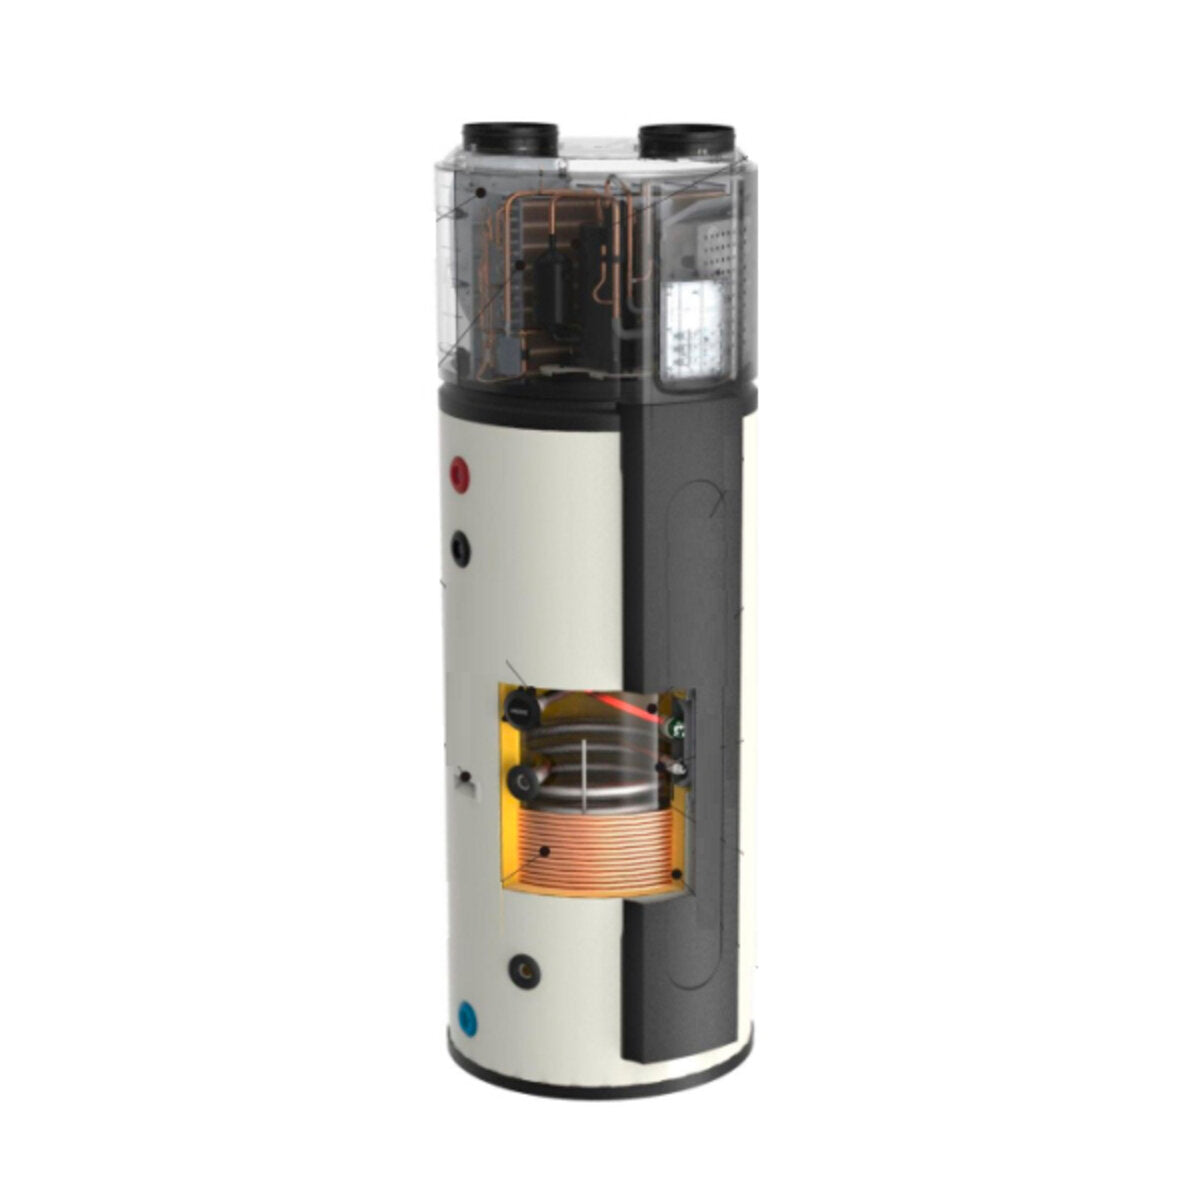 Clivet AQUA Plus SWAN-2 300S heat pump water heater with coil